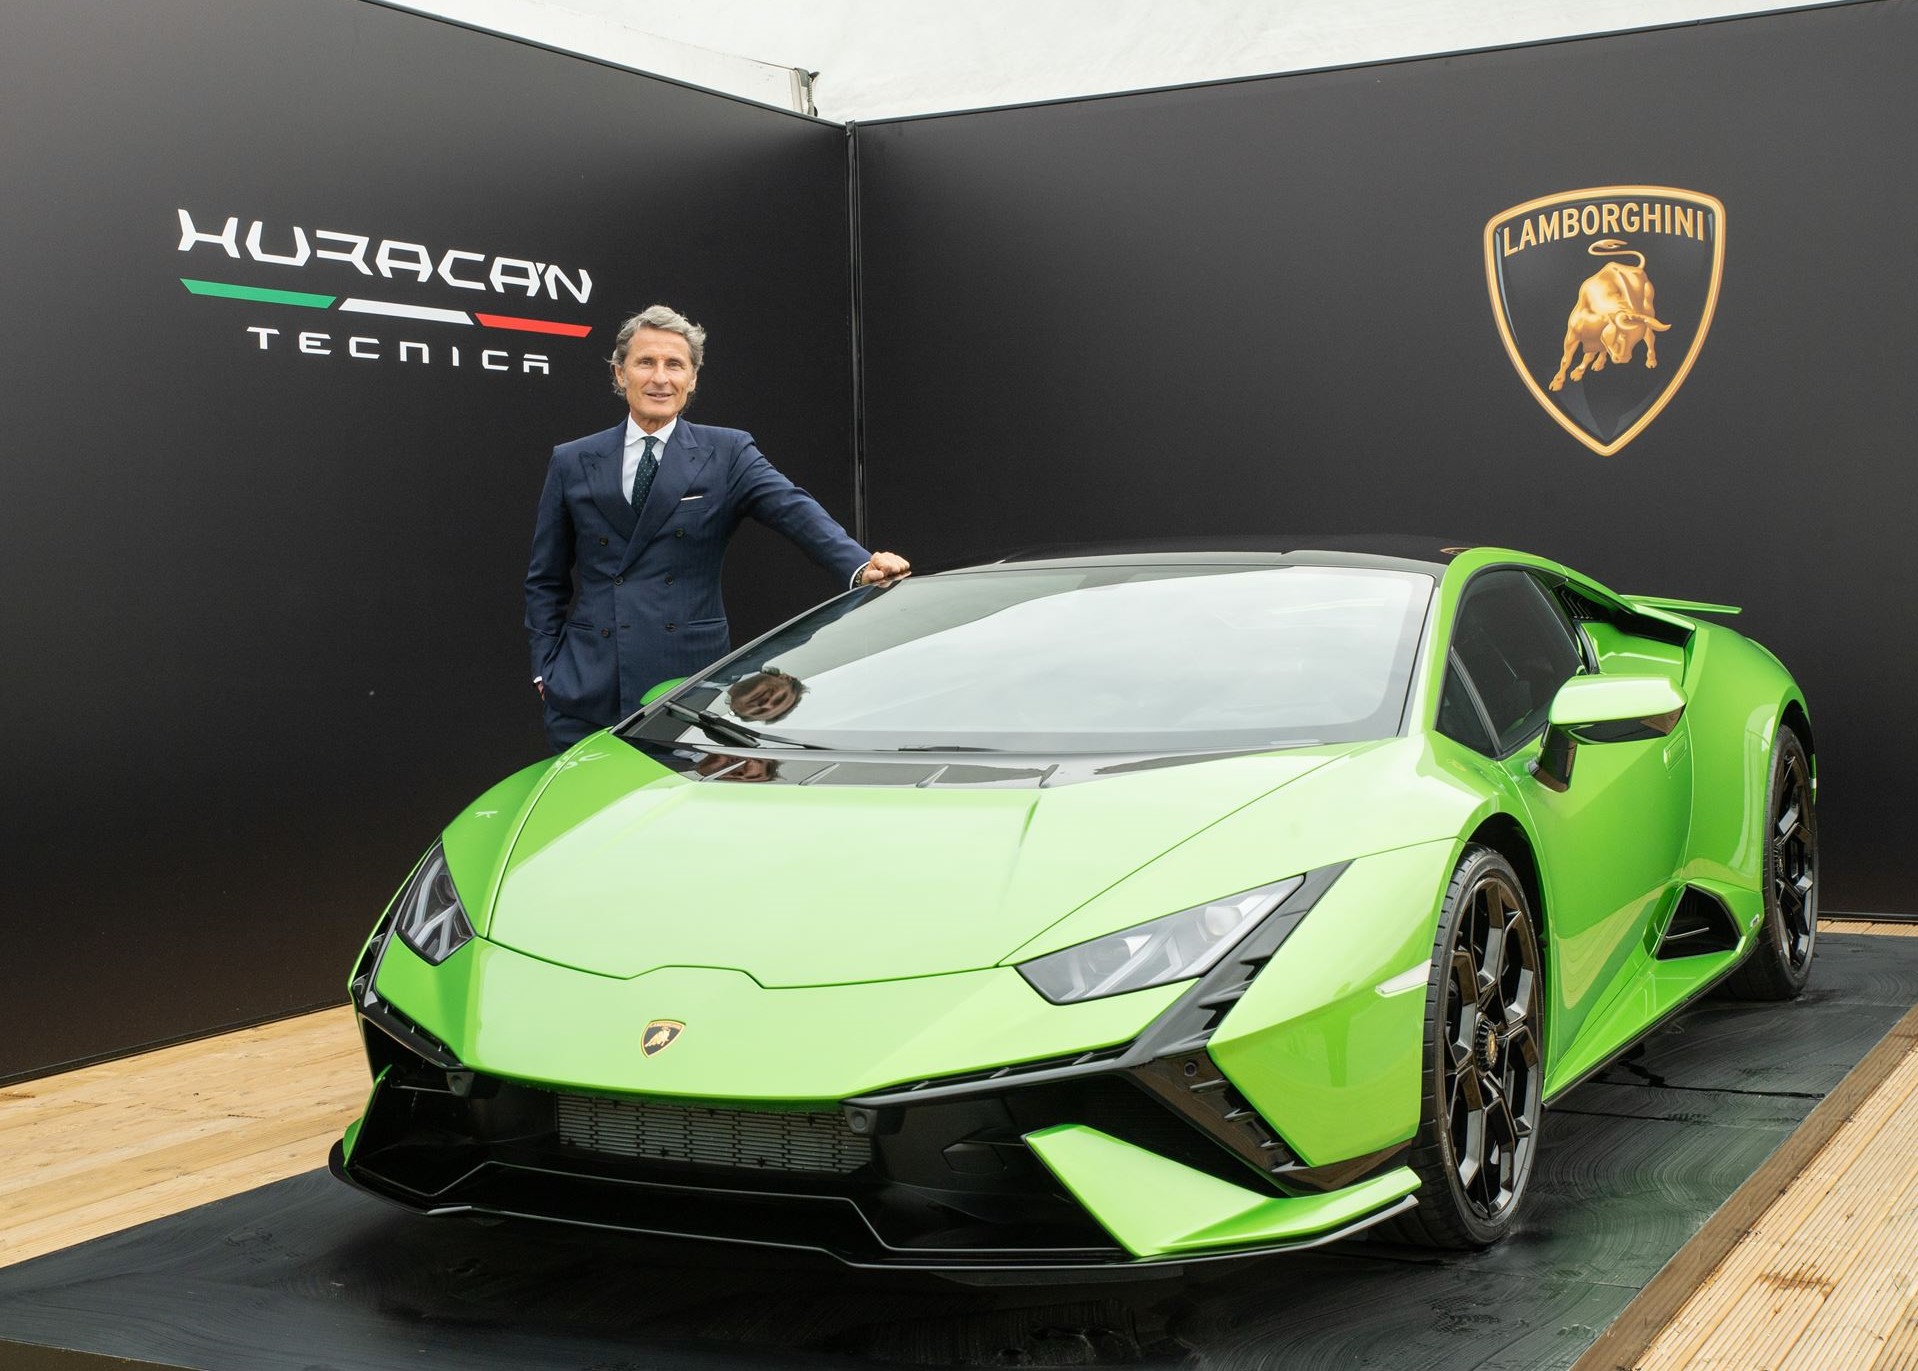 We The Italians | “Lamborghini, start your engines”